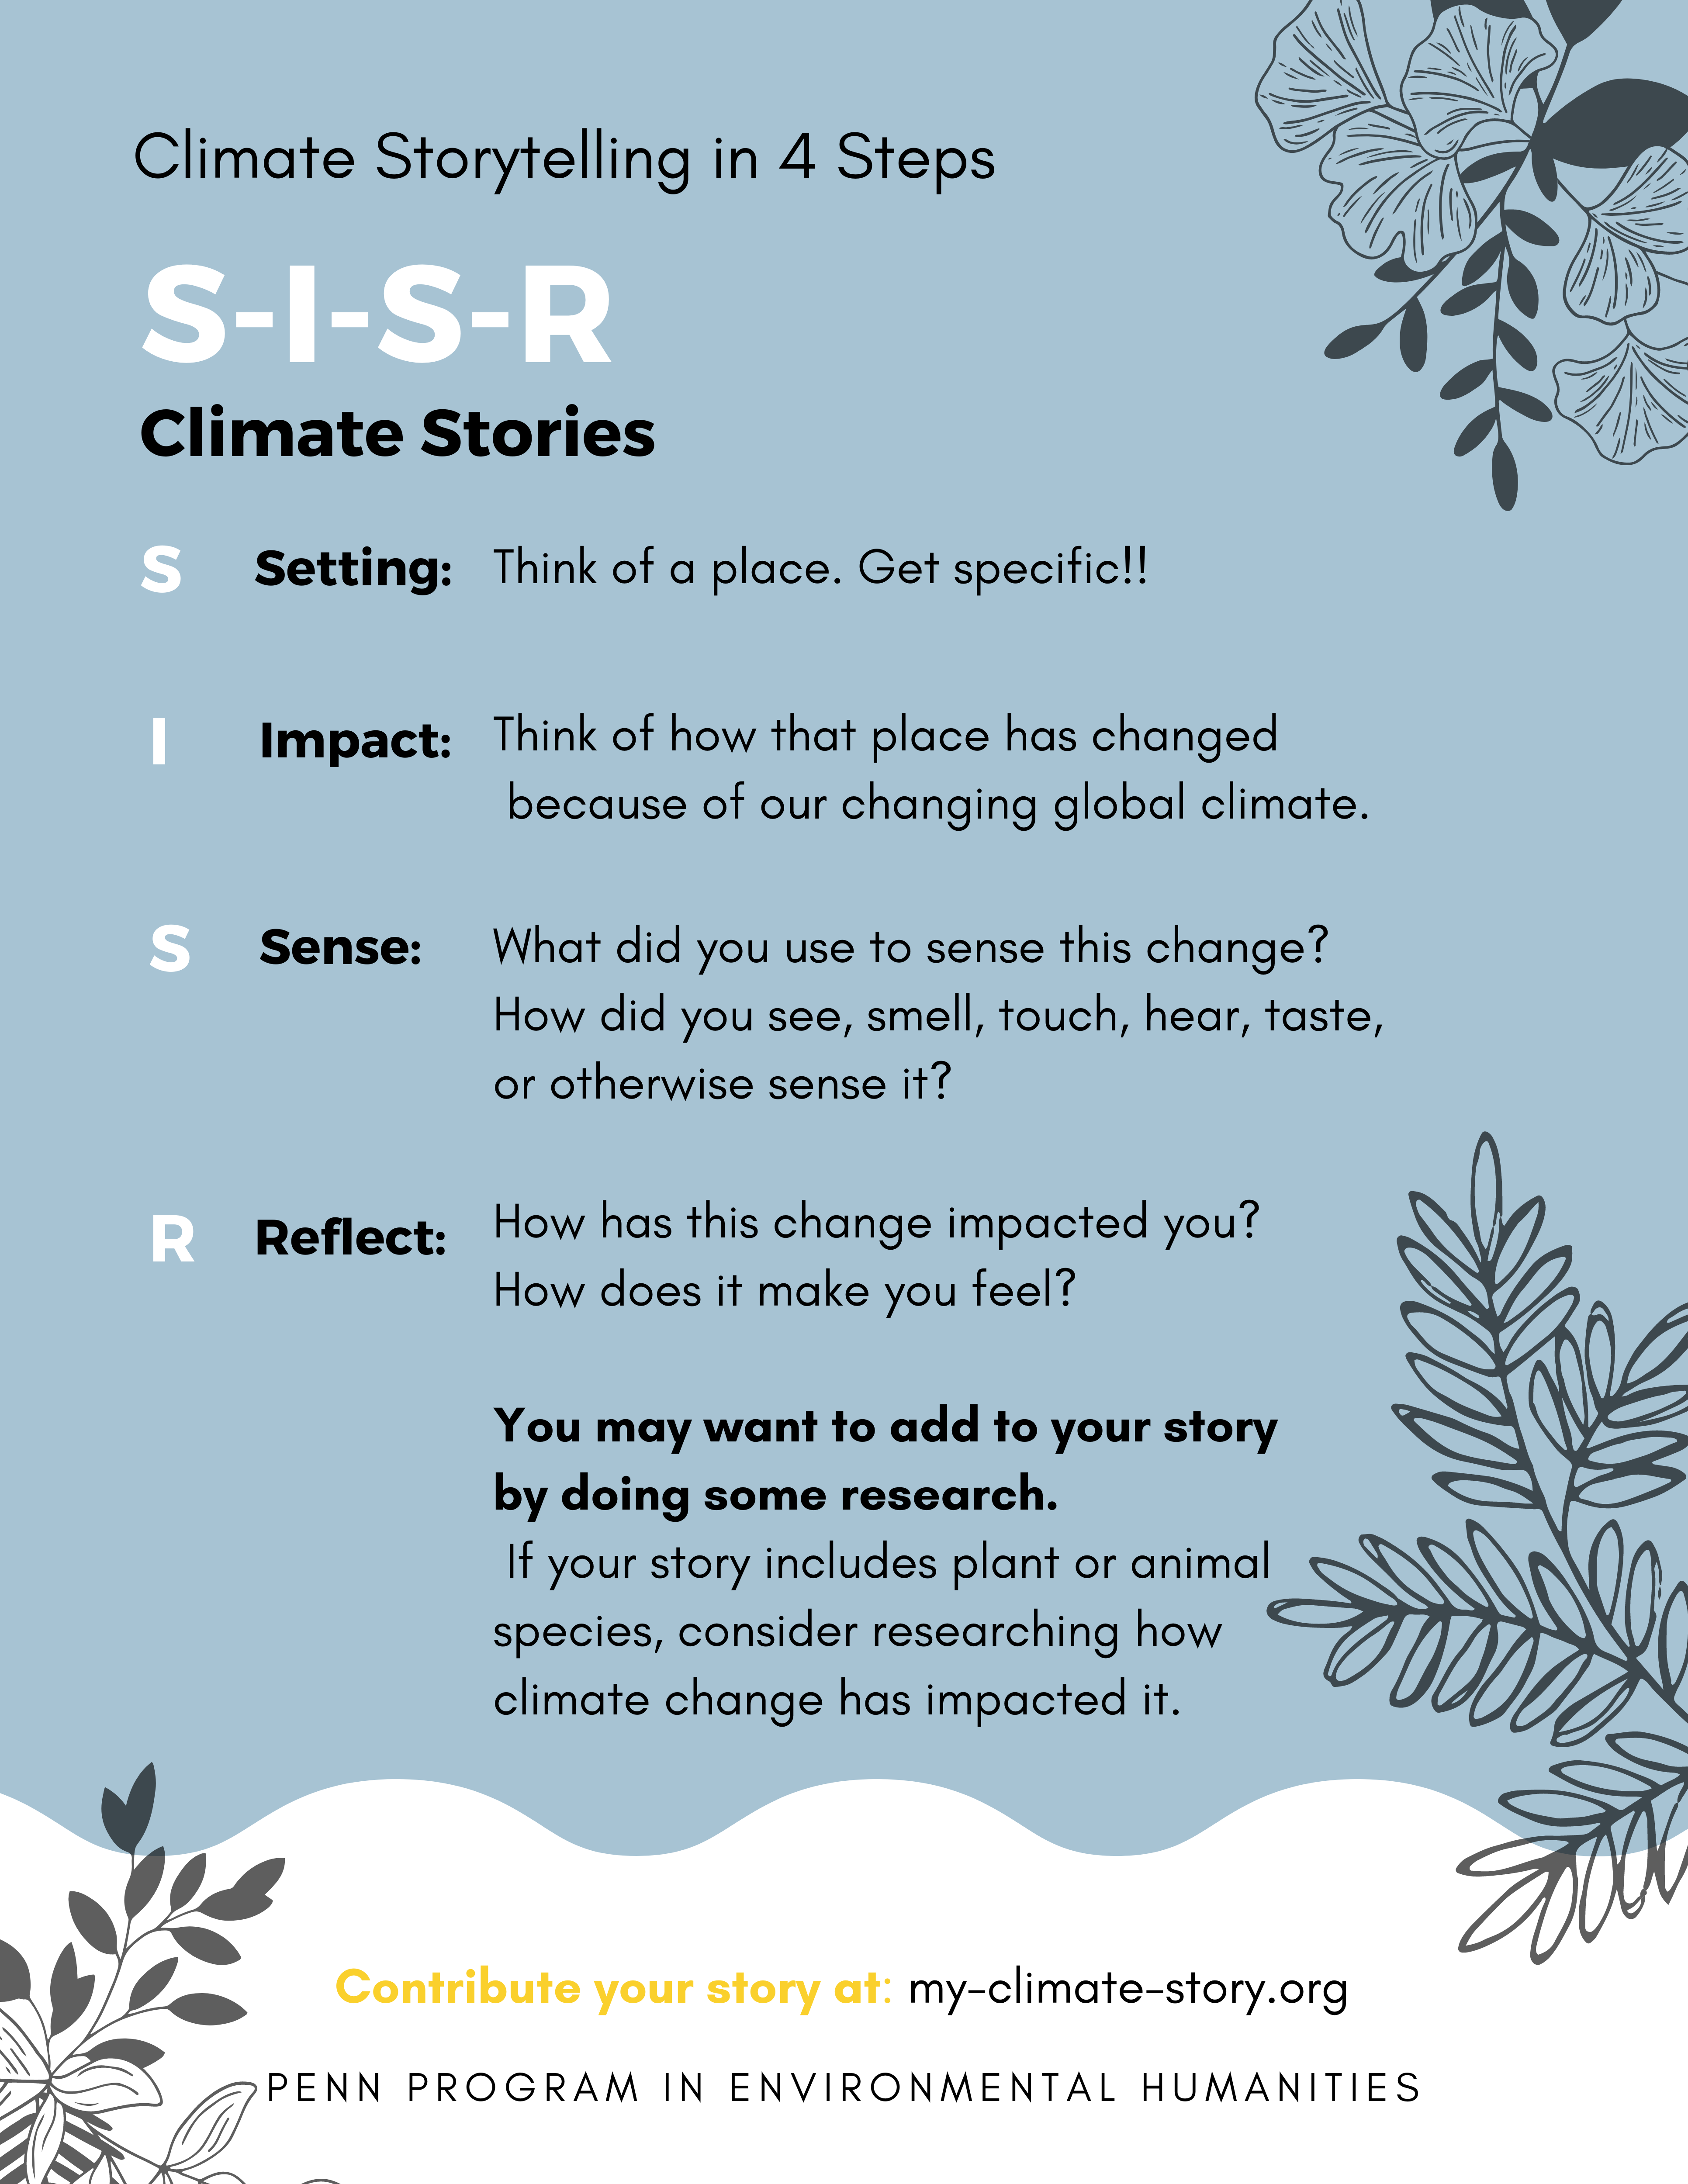 Climate storytelling steps listed: Setting, Impact, Sense, Reflect